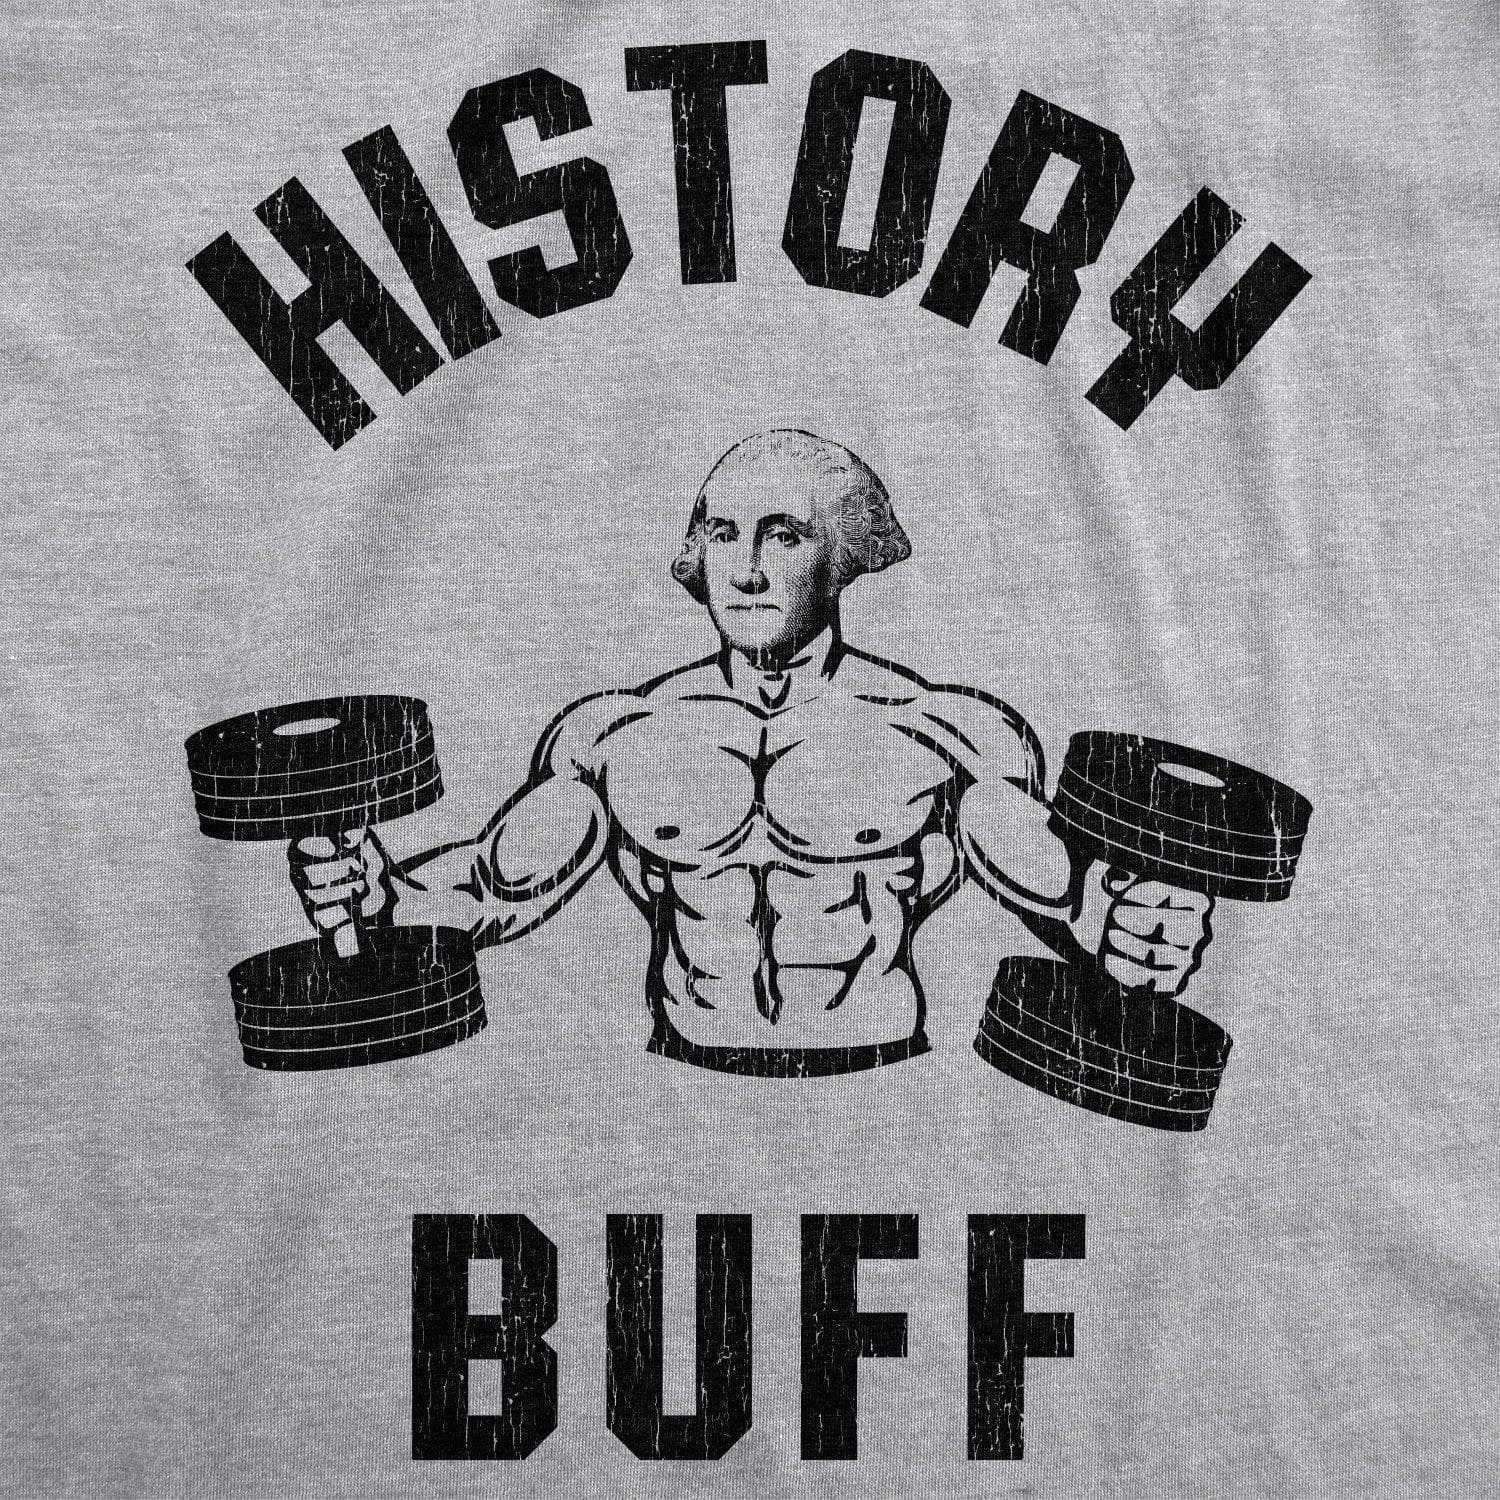 History Buff Men's Tshirt  -  Crazy Dog T-Shirts